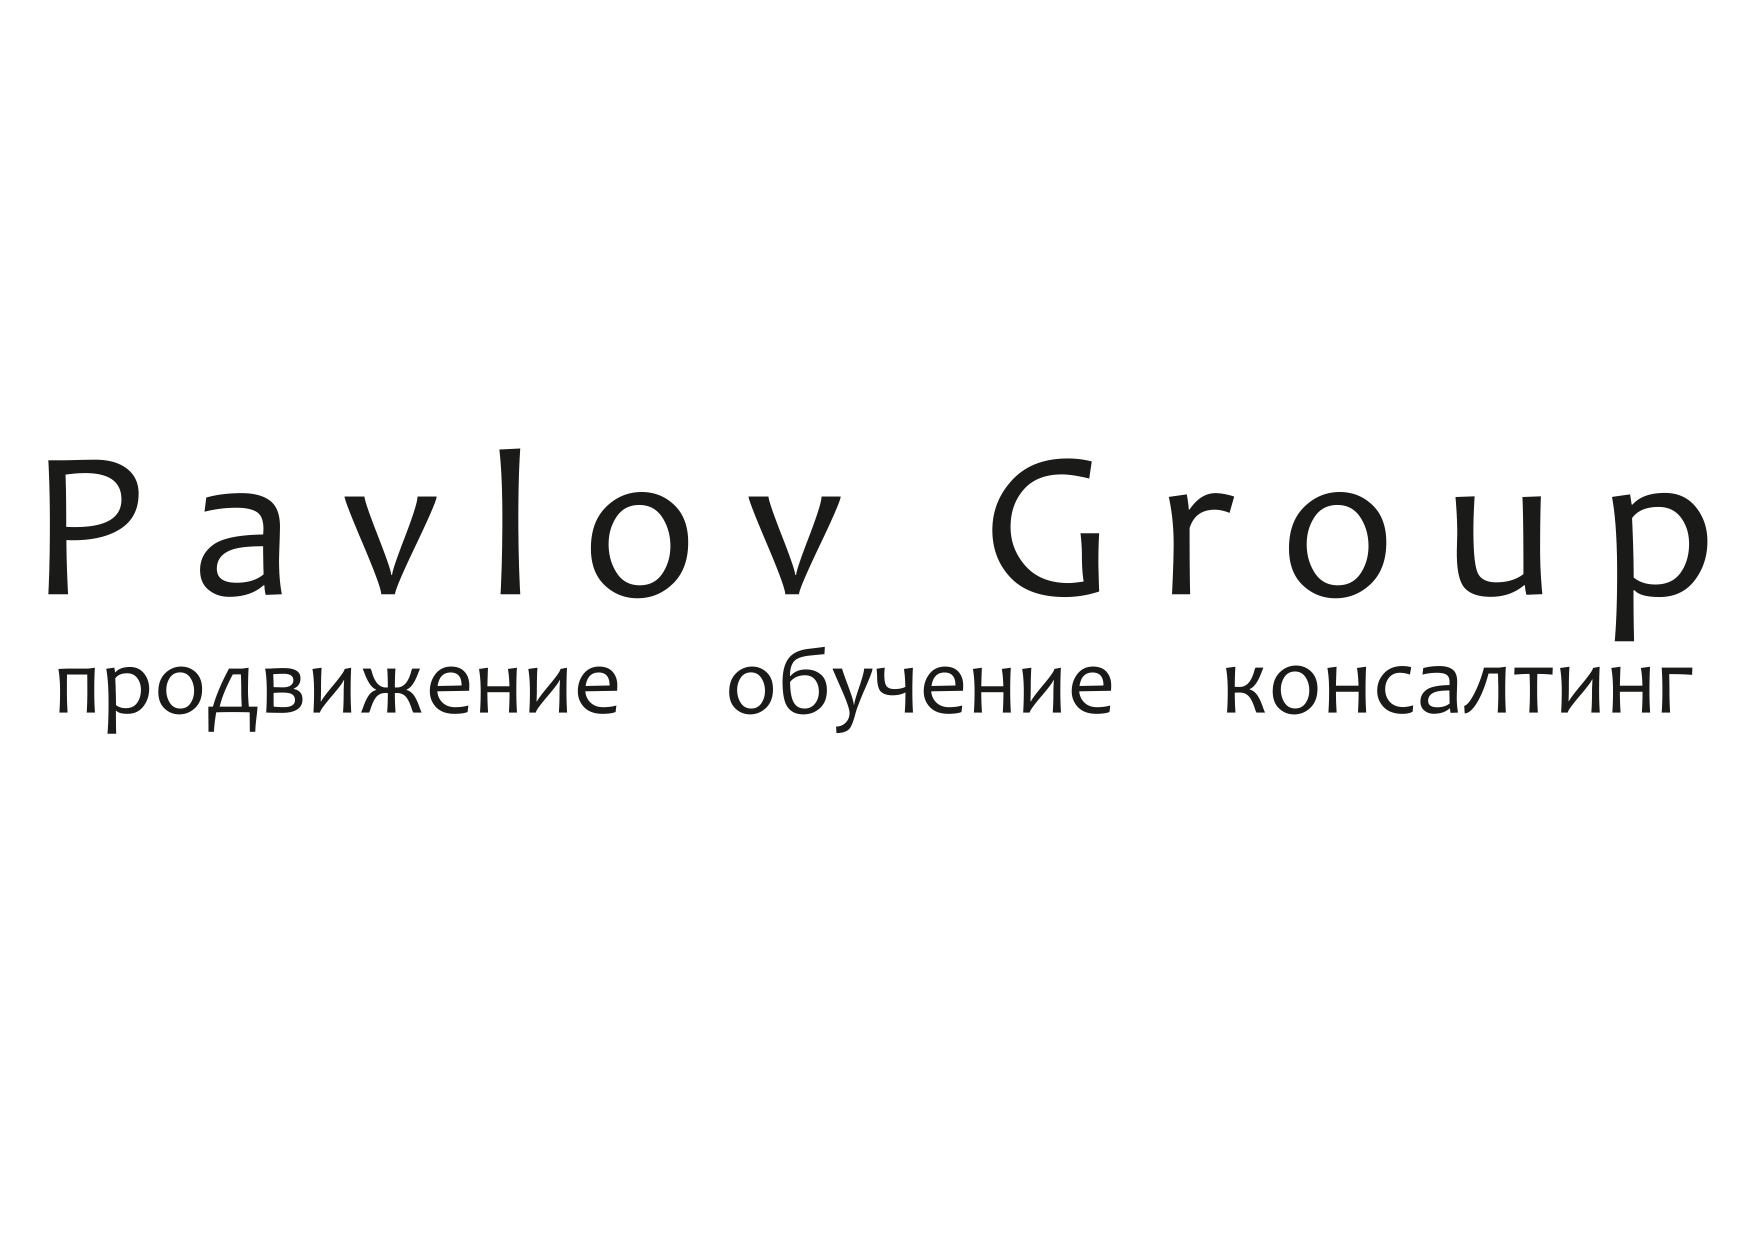 Pavlov Group